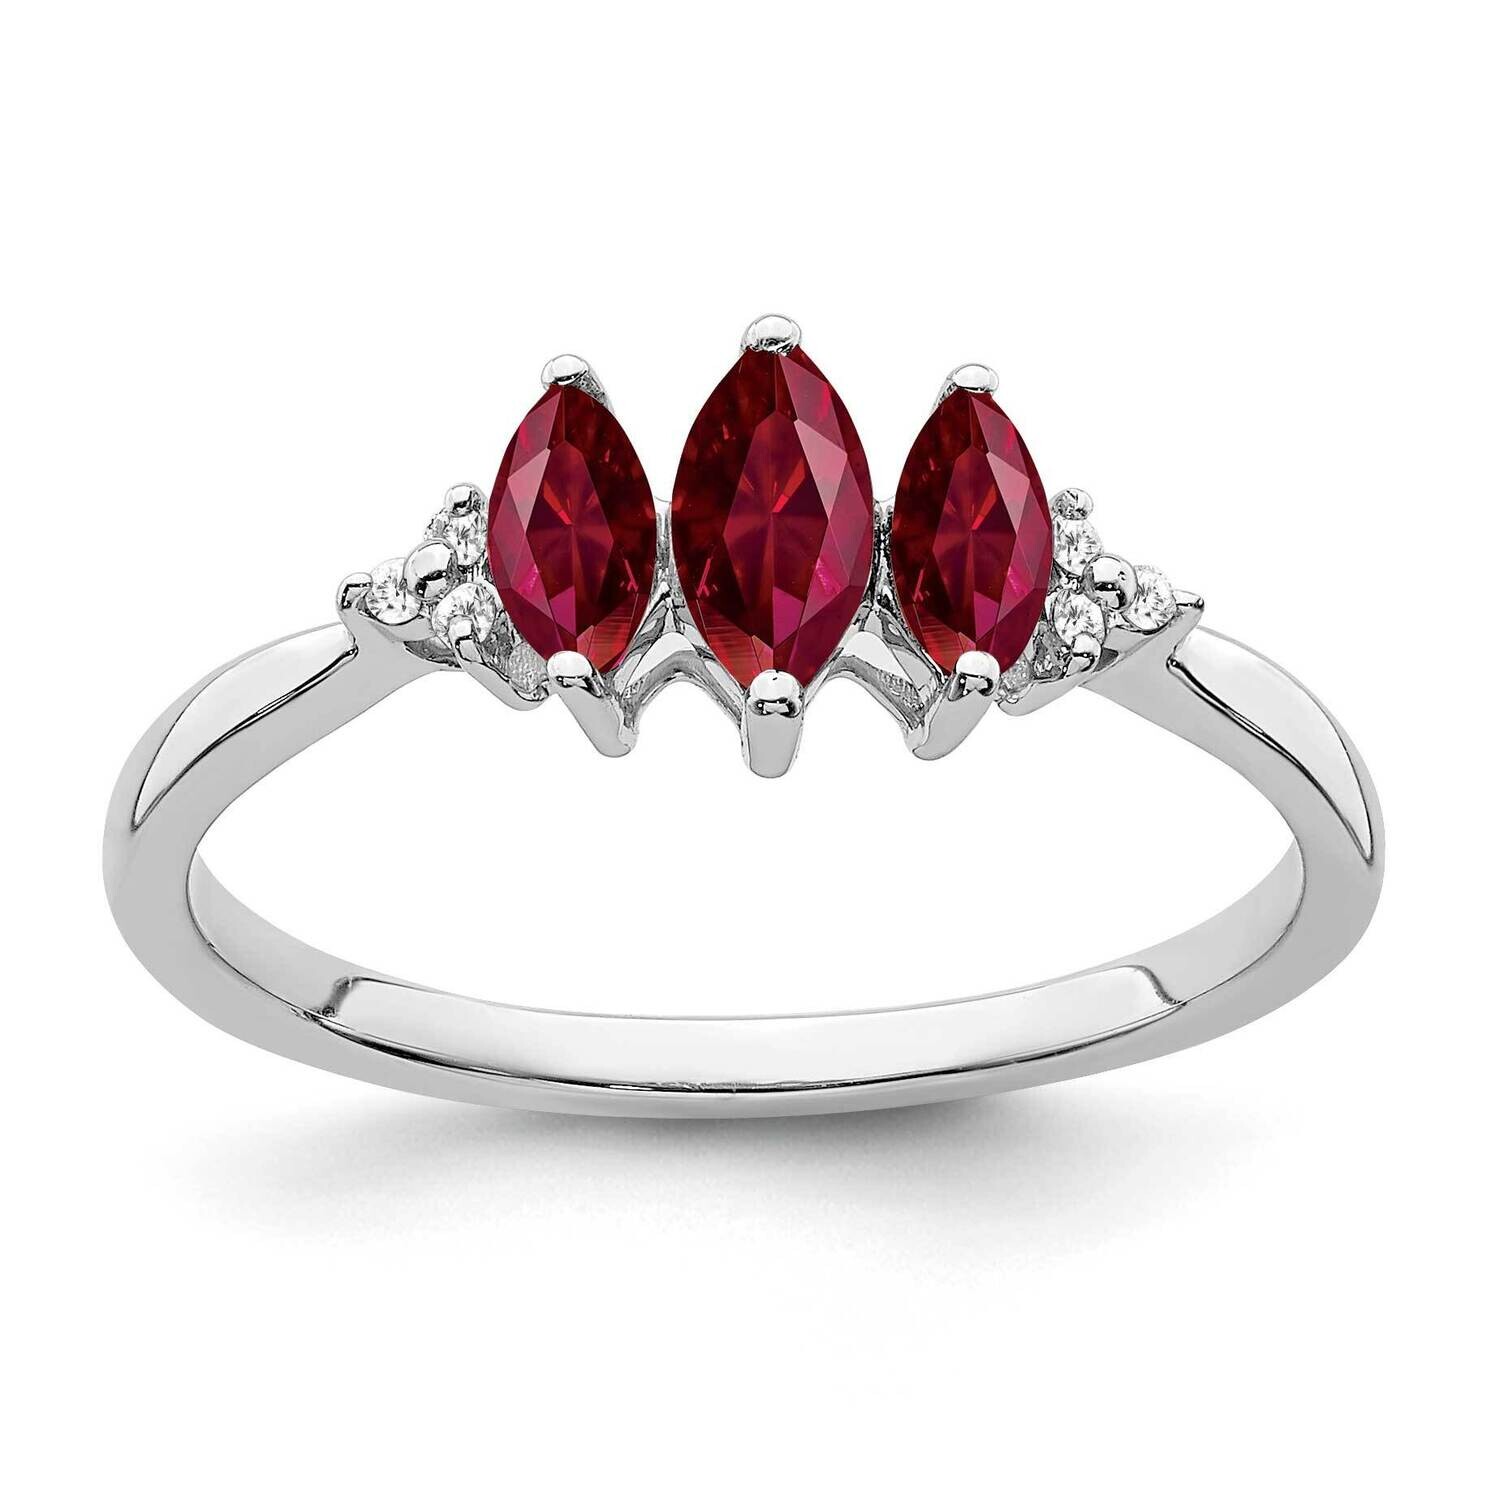 Marquise Created Ruby Diamond 3-Stone Ring 14k White Gold RM7236-RU-003-WA